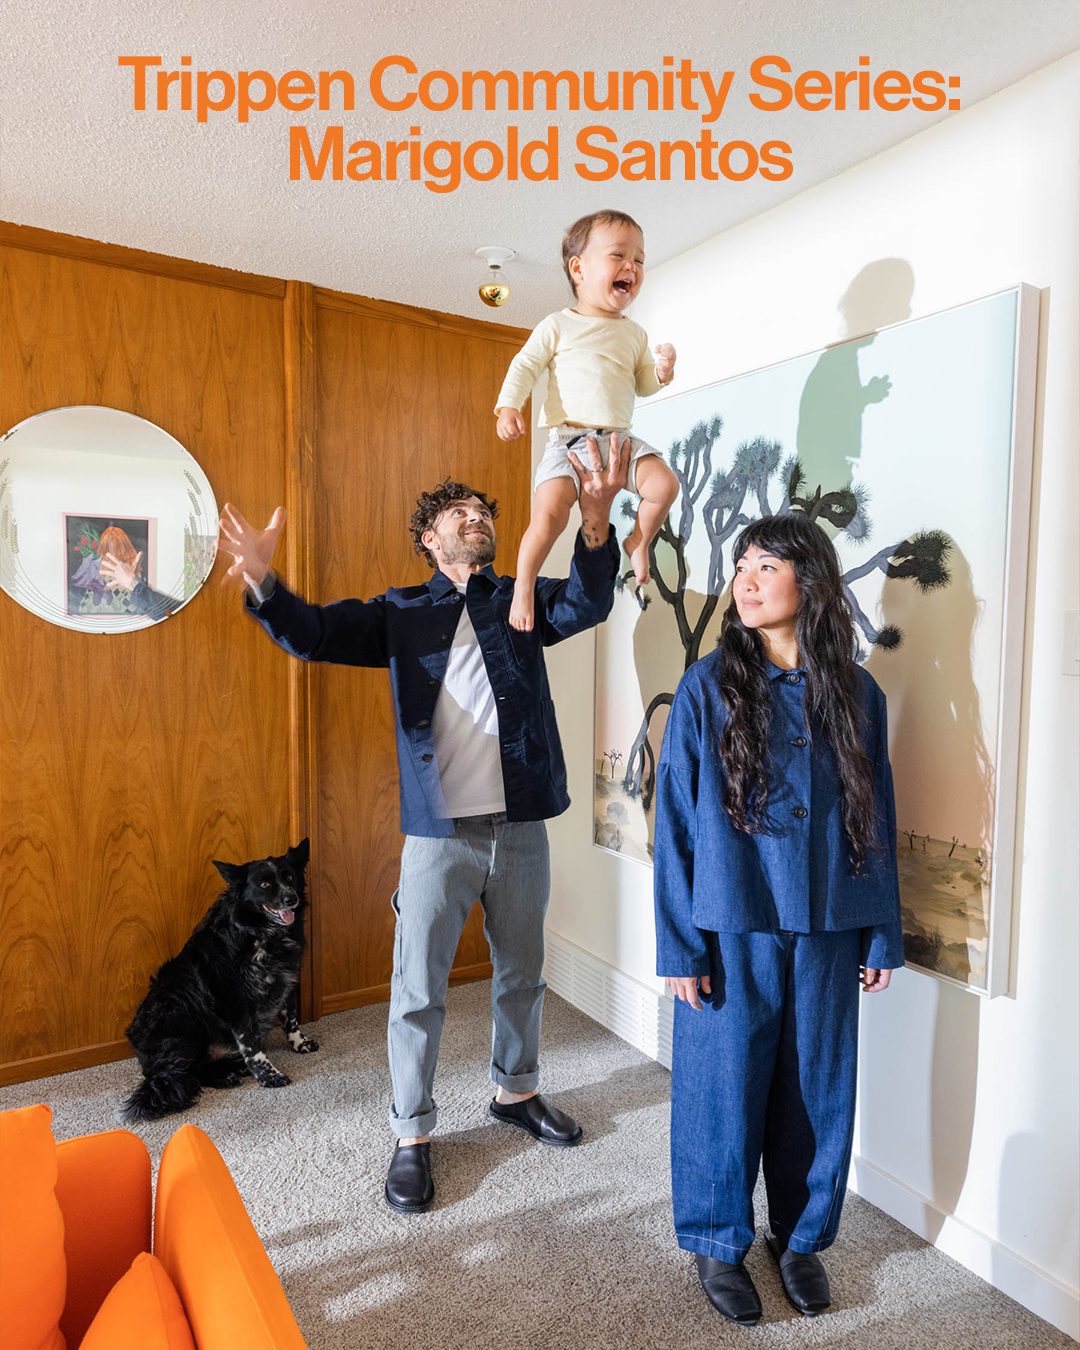 Trippen Community Series: Marigold Santos